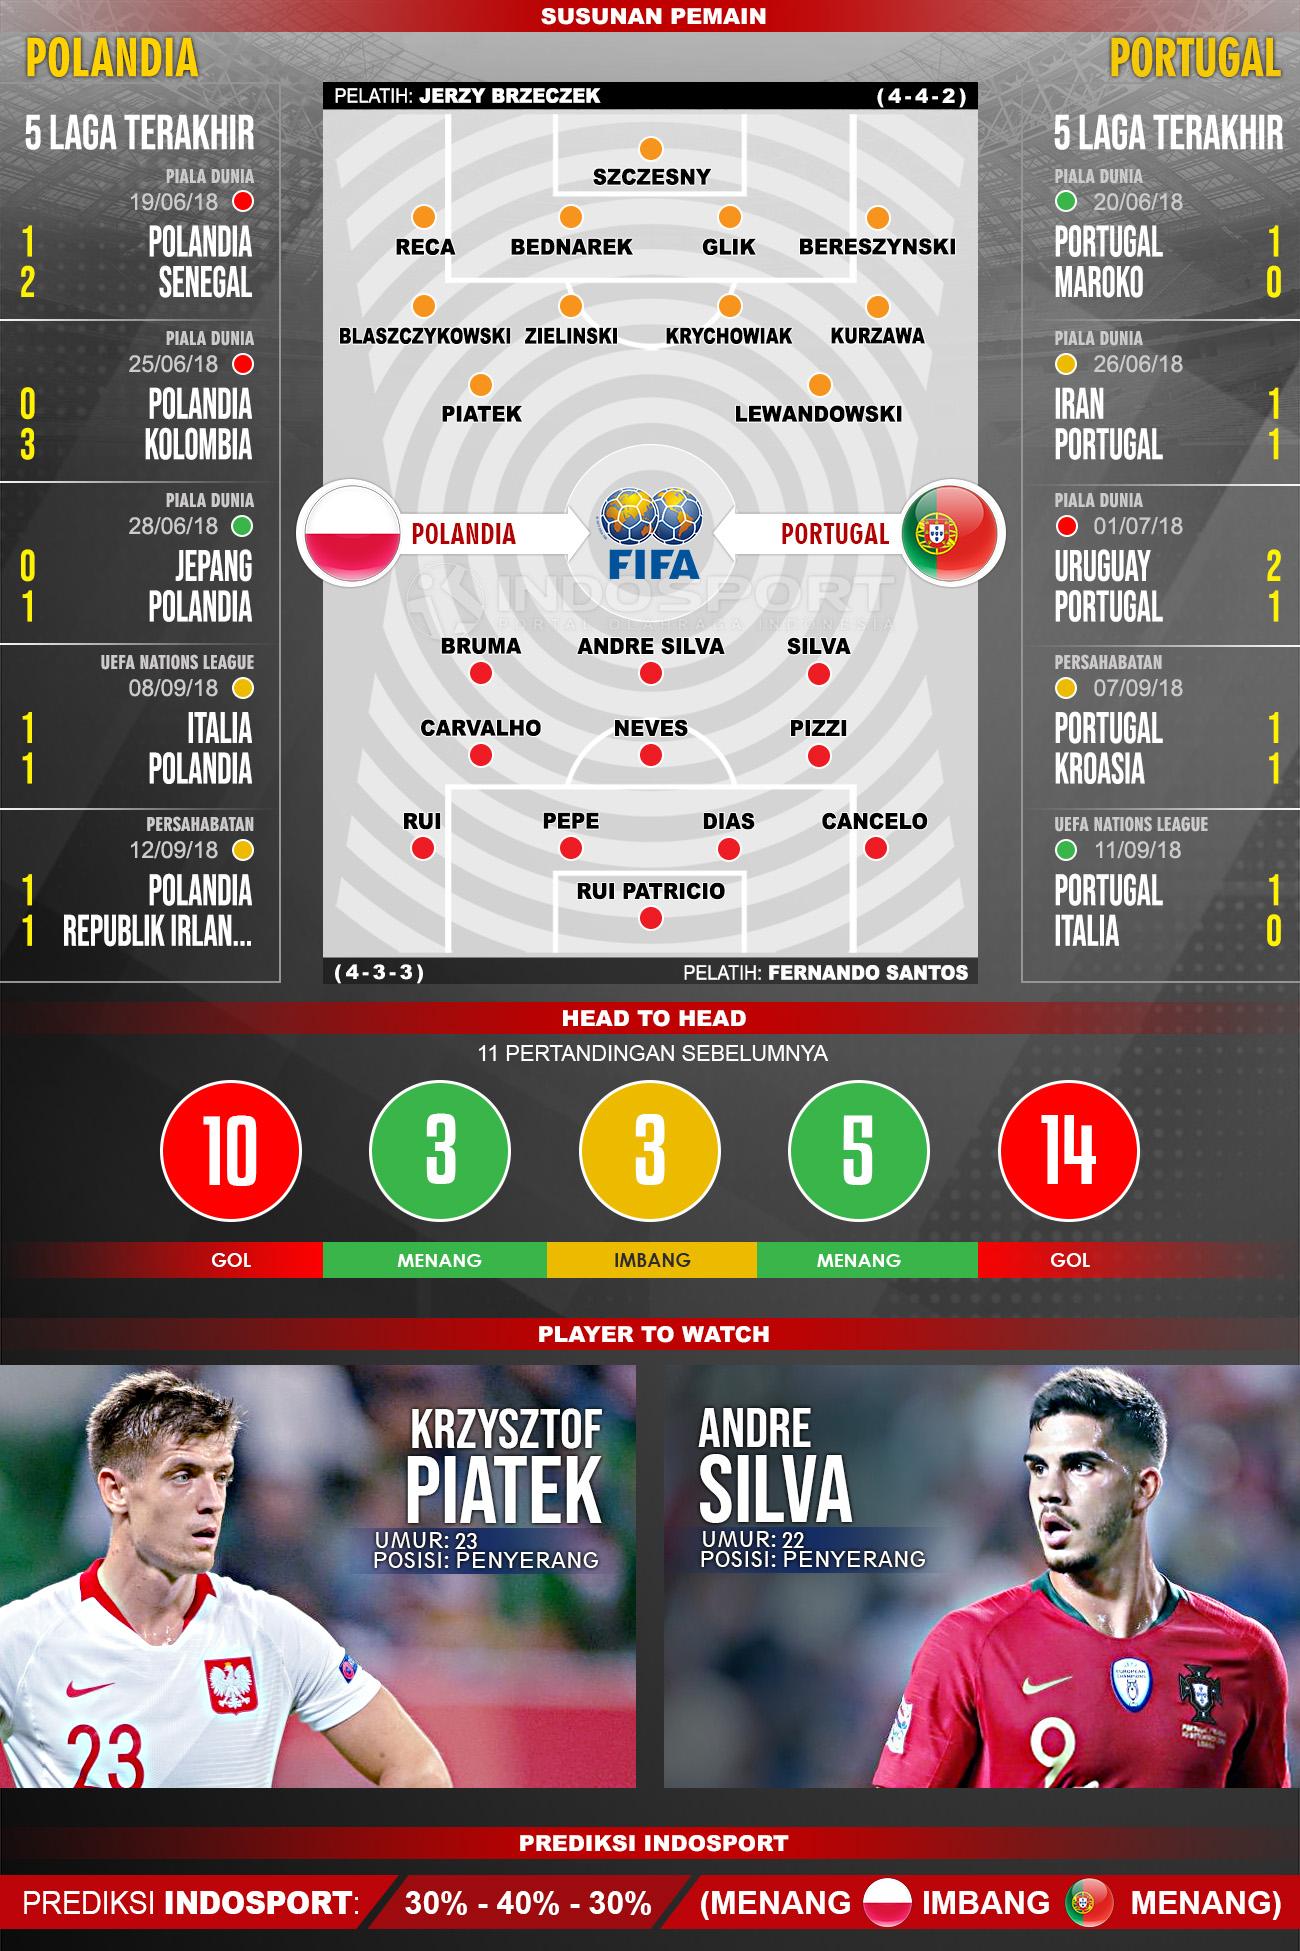 Polandia vs Portugal (Susunan Pemain - Lima Laga Terakhir - Player to Watch - Prediksi Indosport). Copyright: Indosport.com